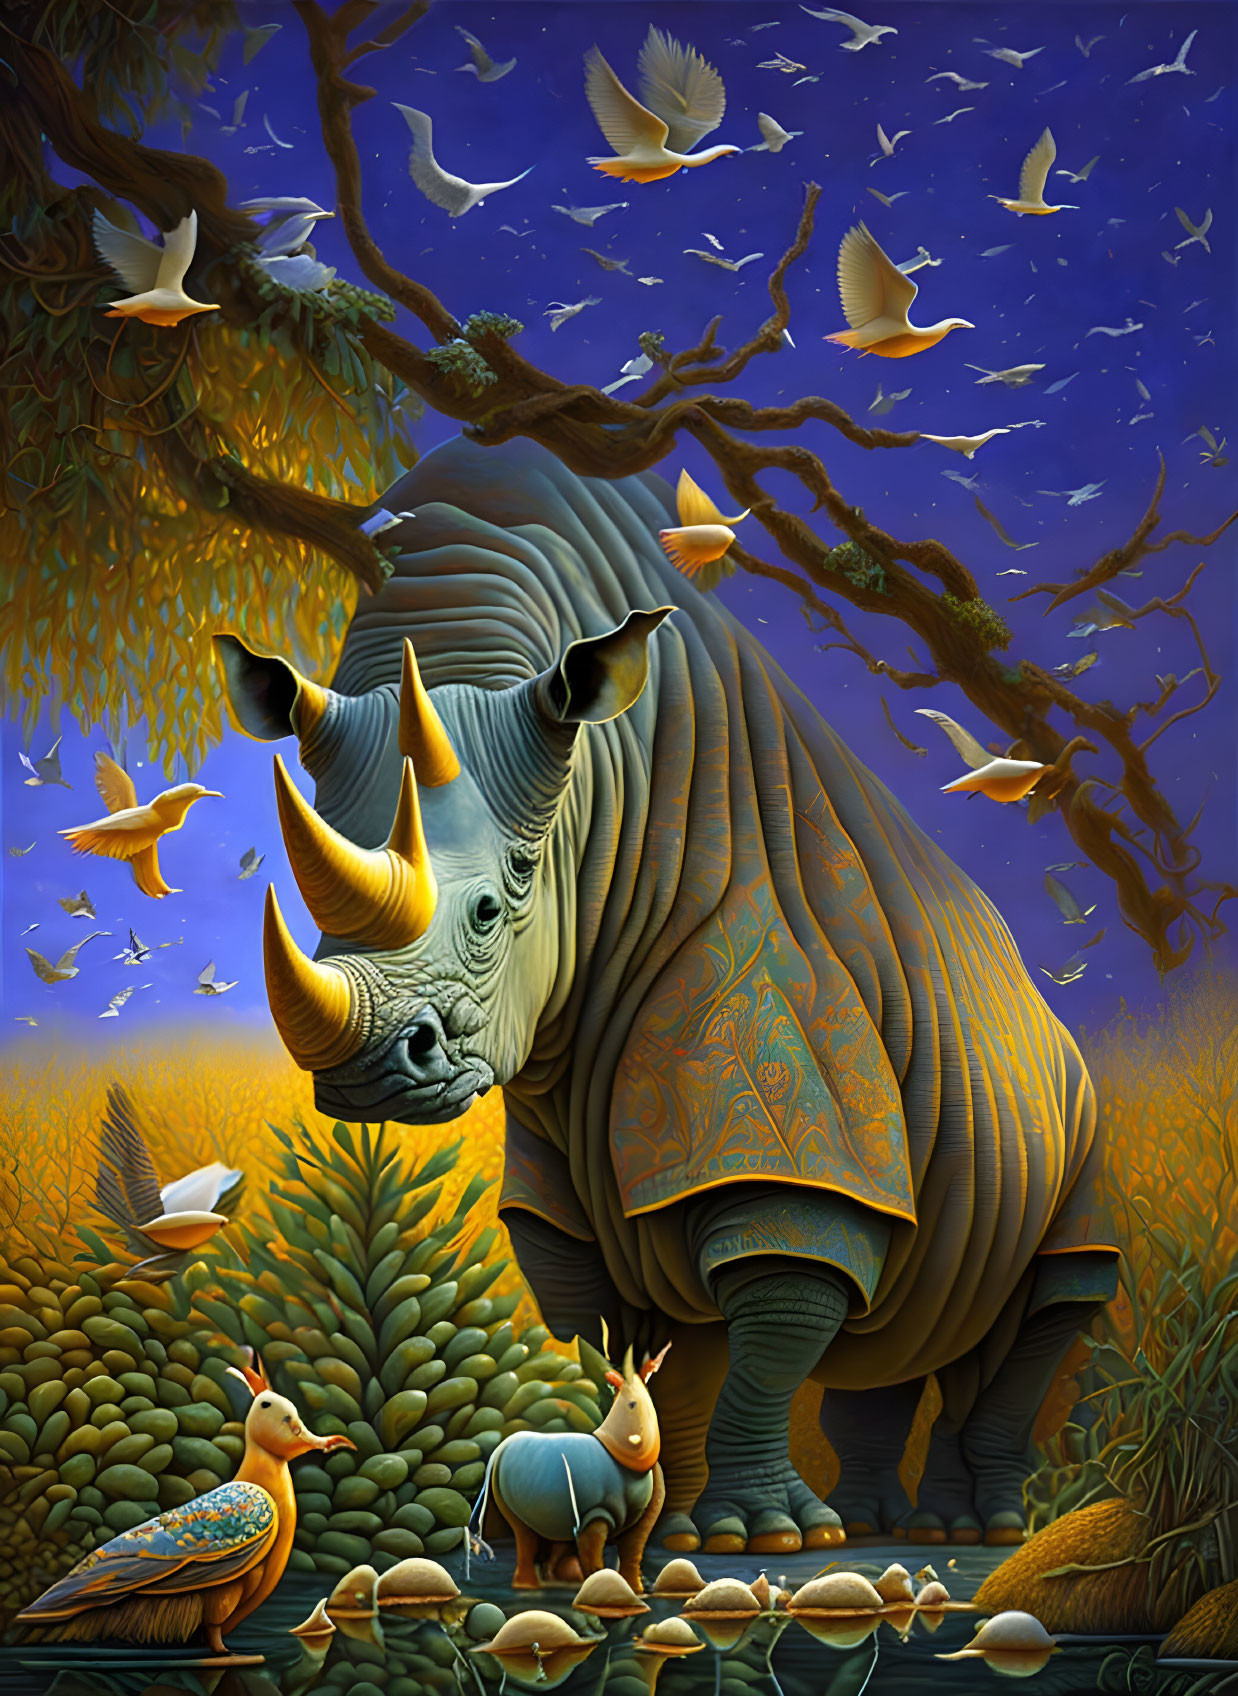 Detailed Rhinoceros Illustration Among Various Animals and Birds at Twilight